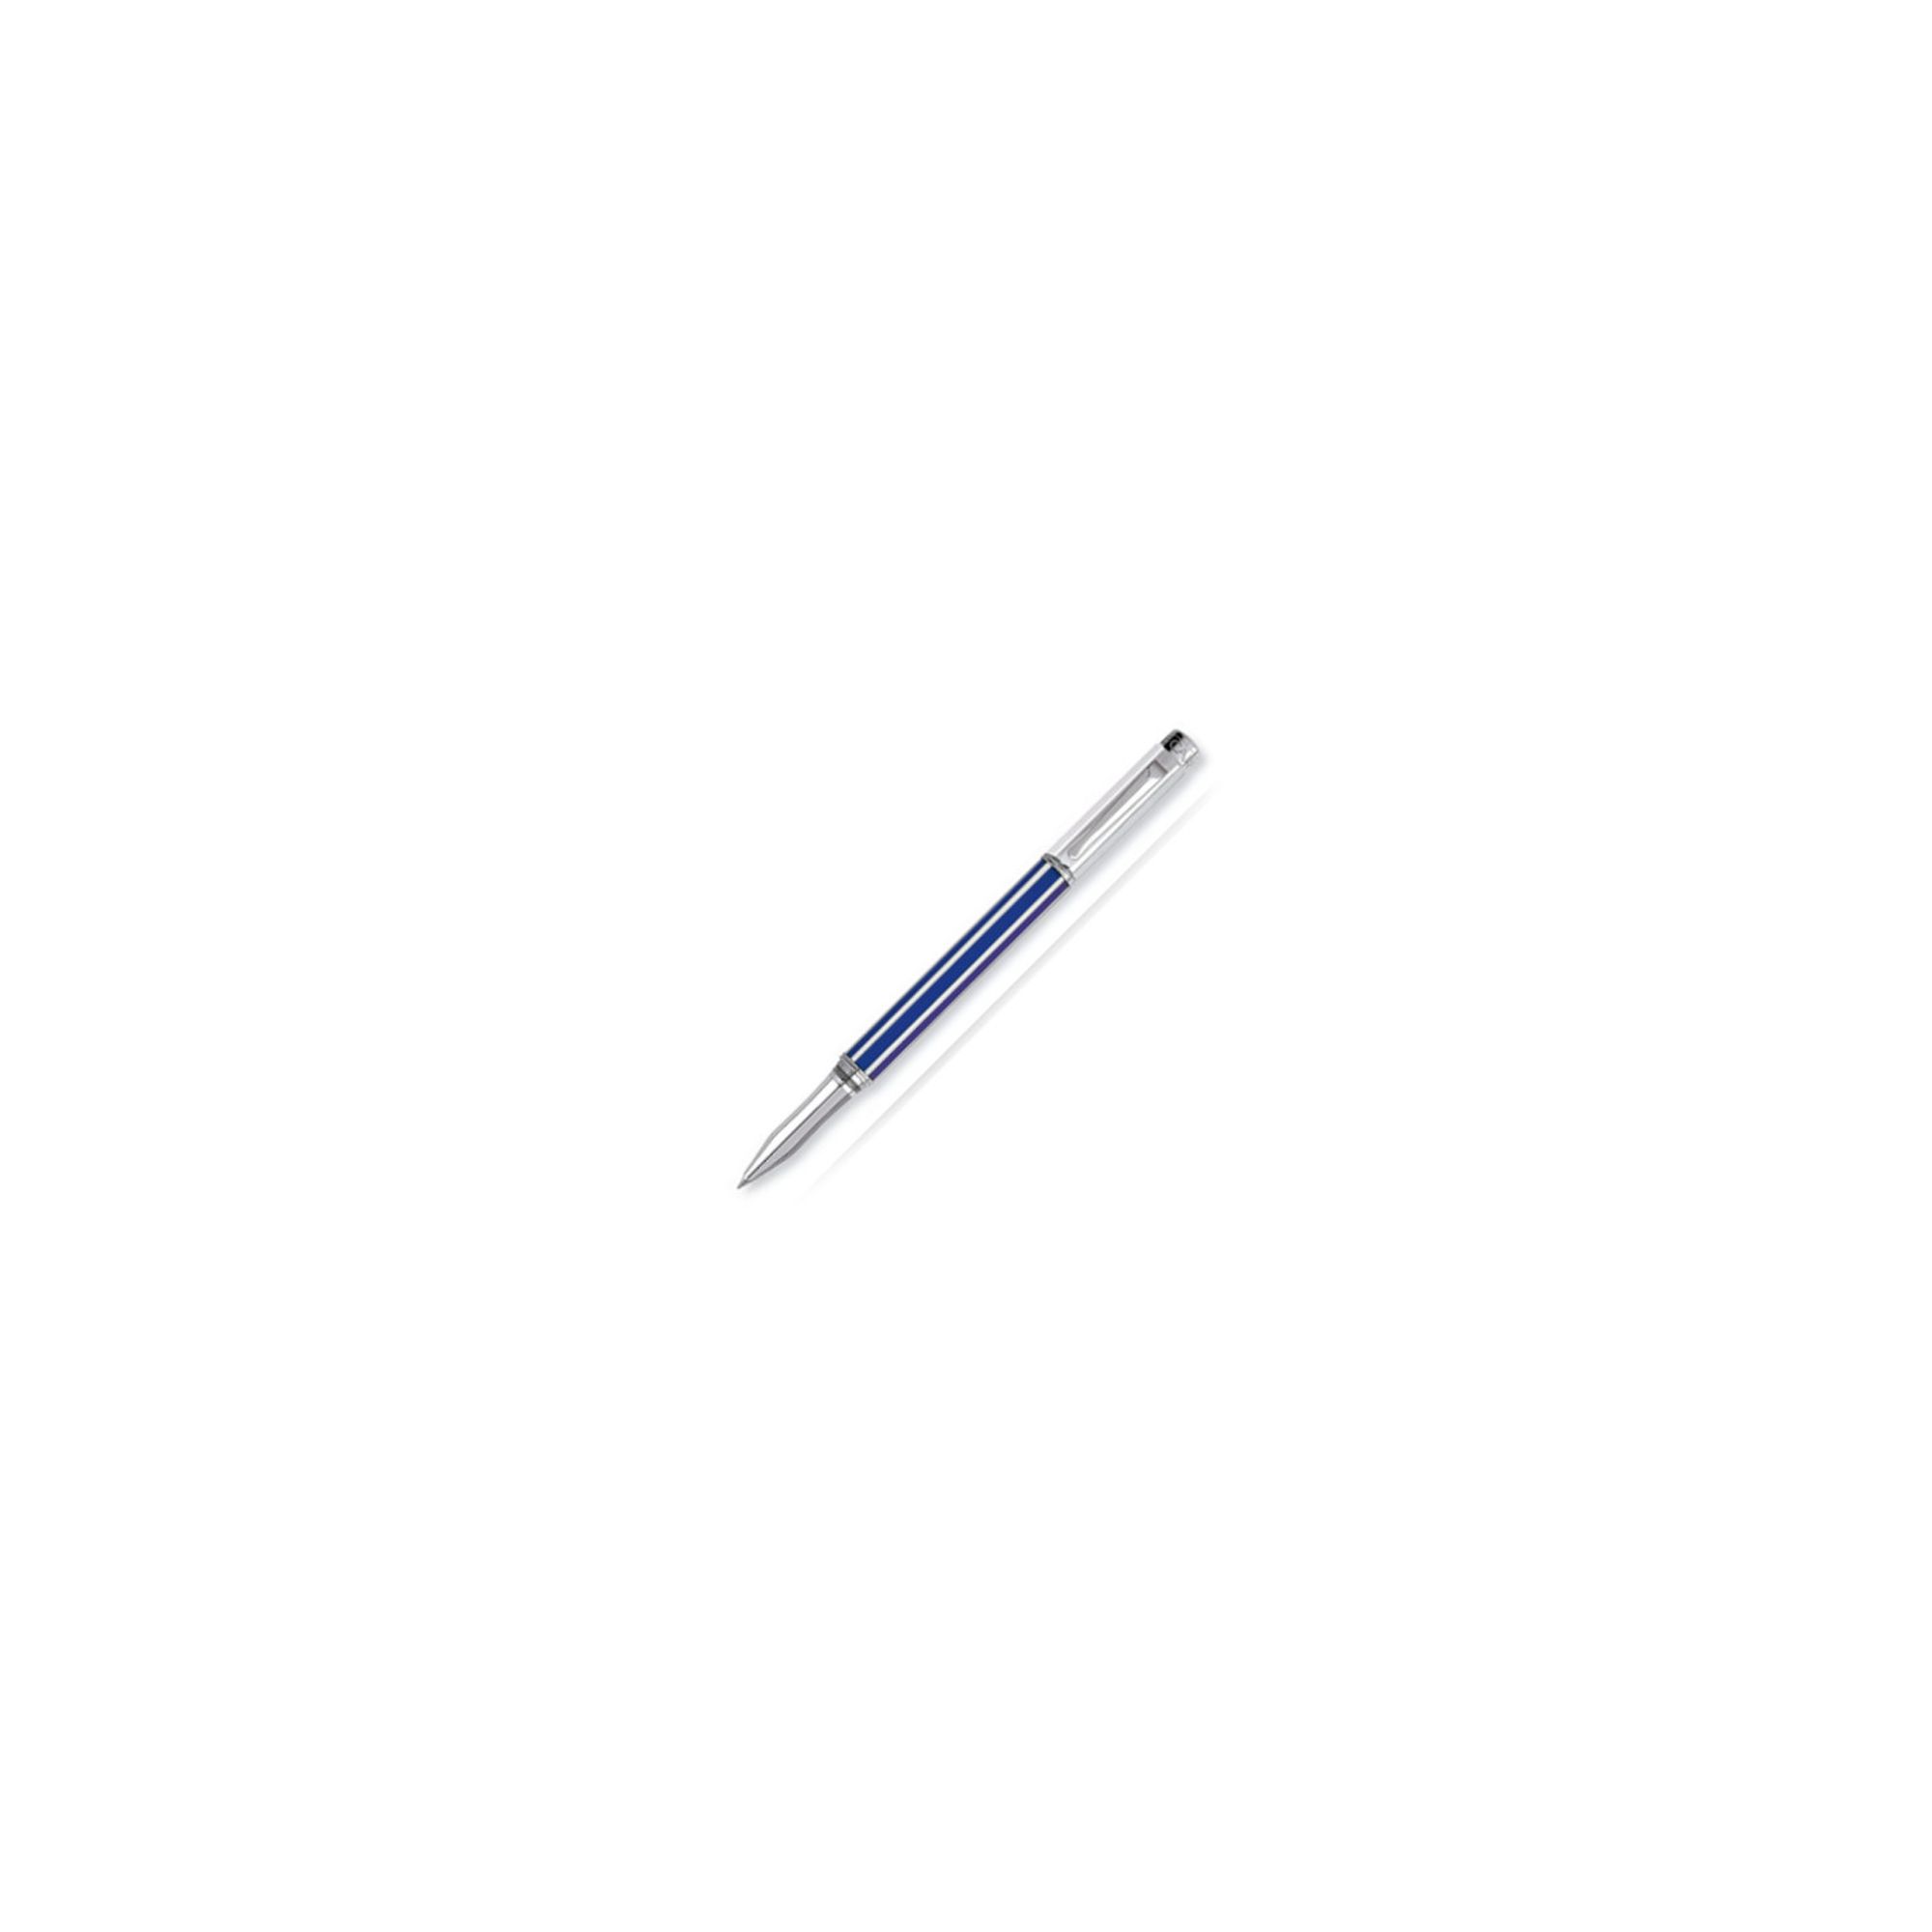 Caran d'Ache Varius China Blue Rollerball Pen at Tesco Direct